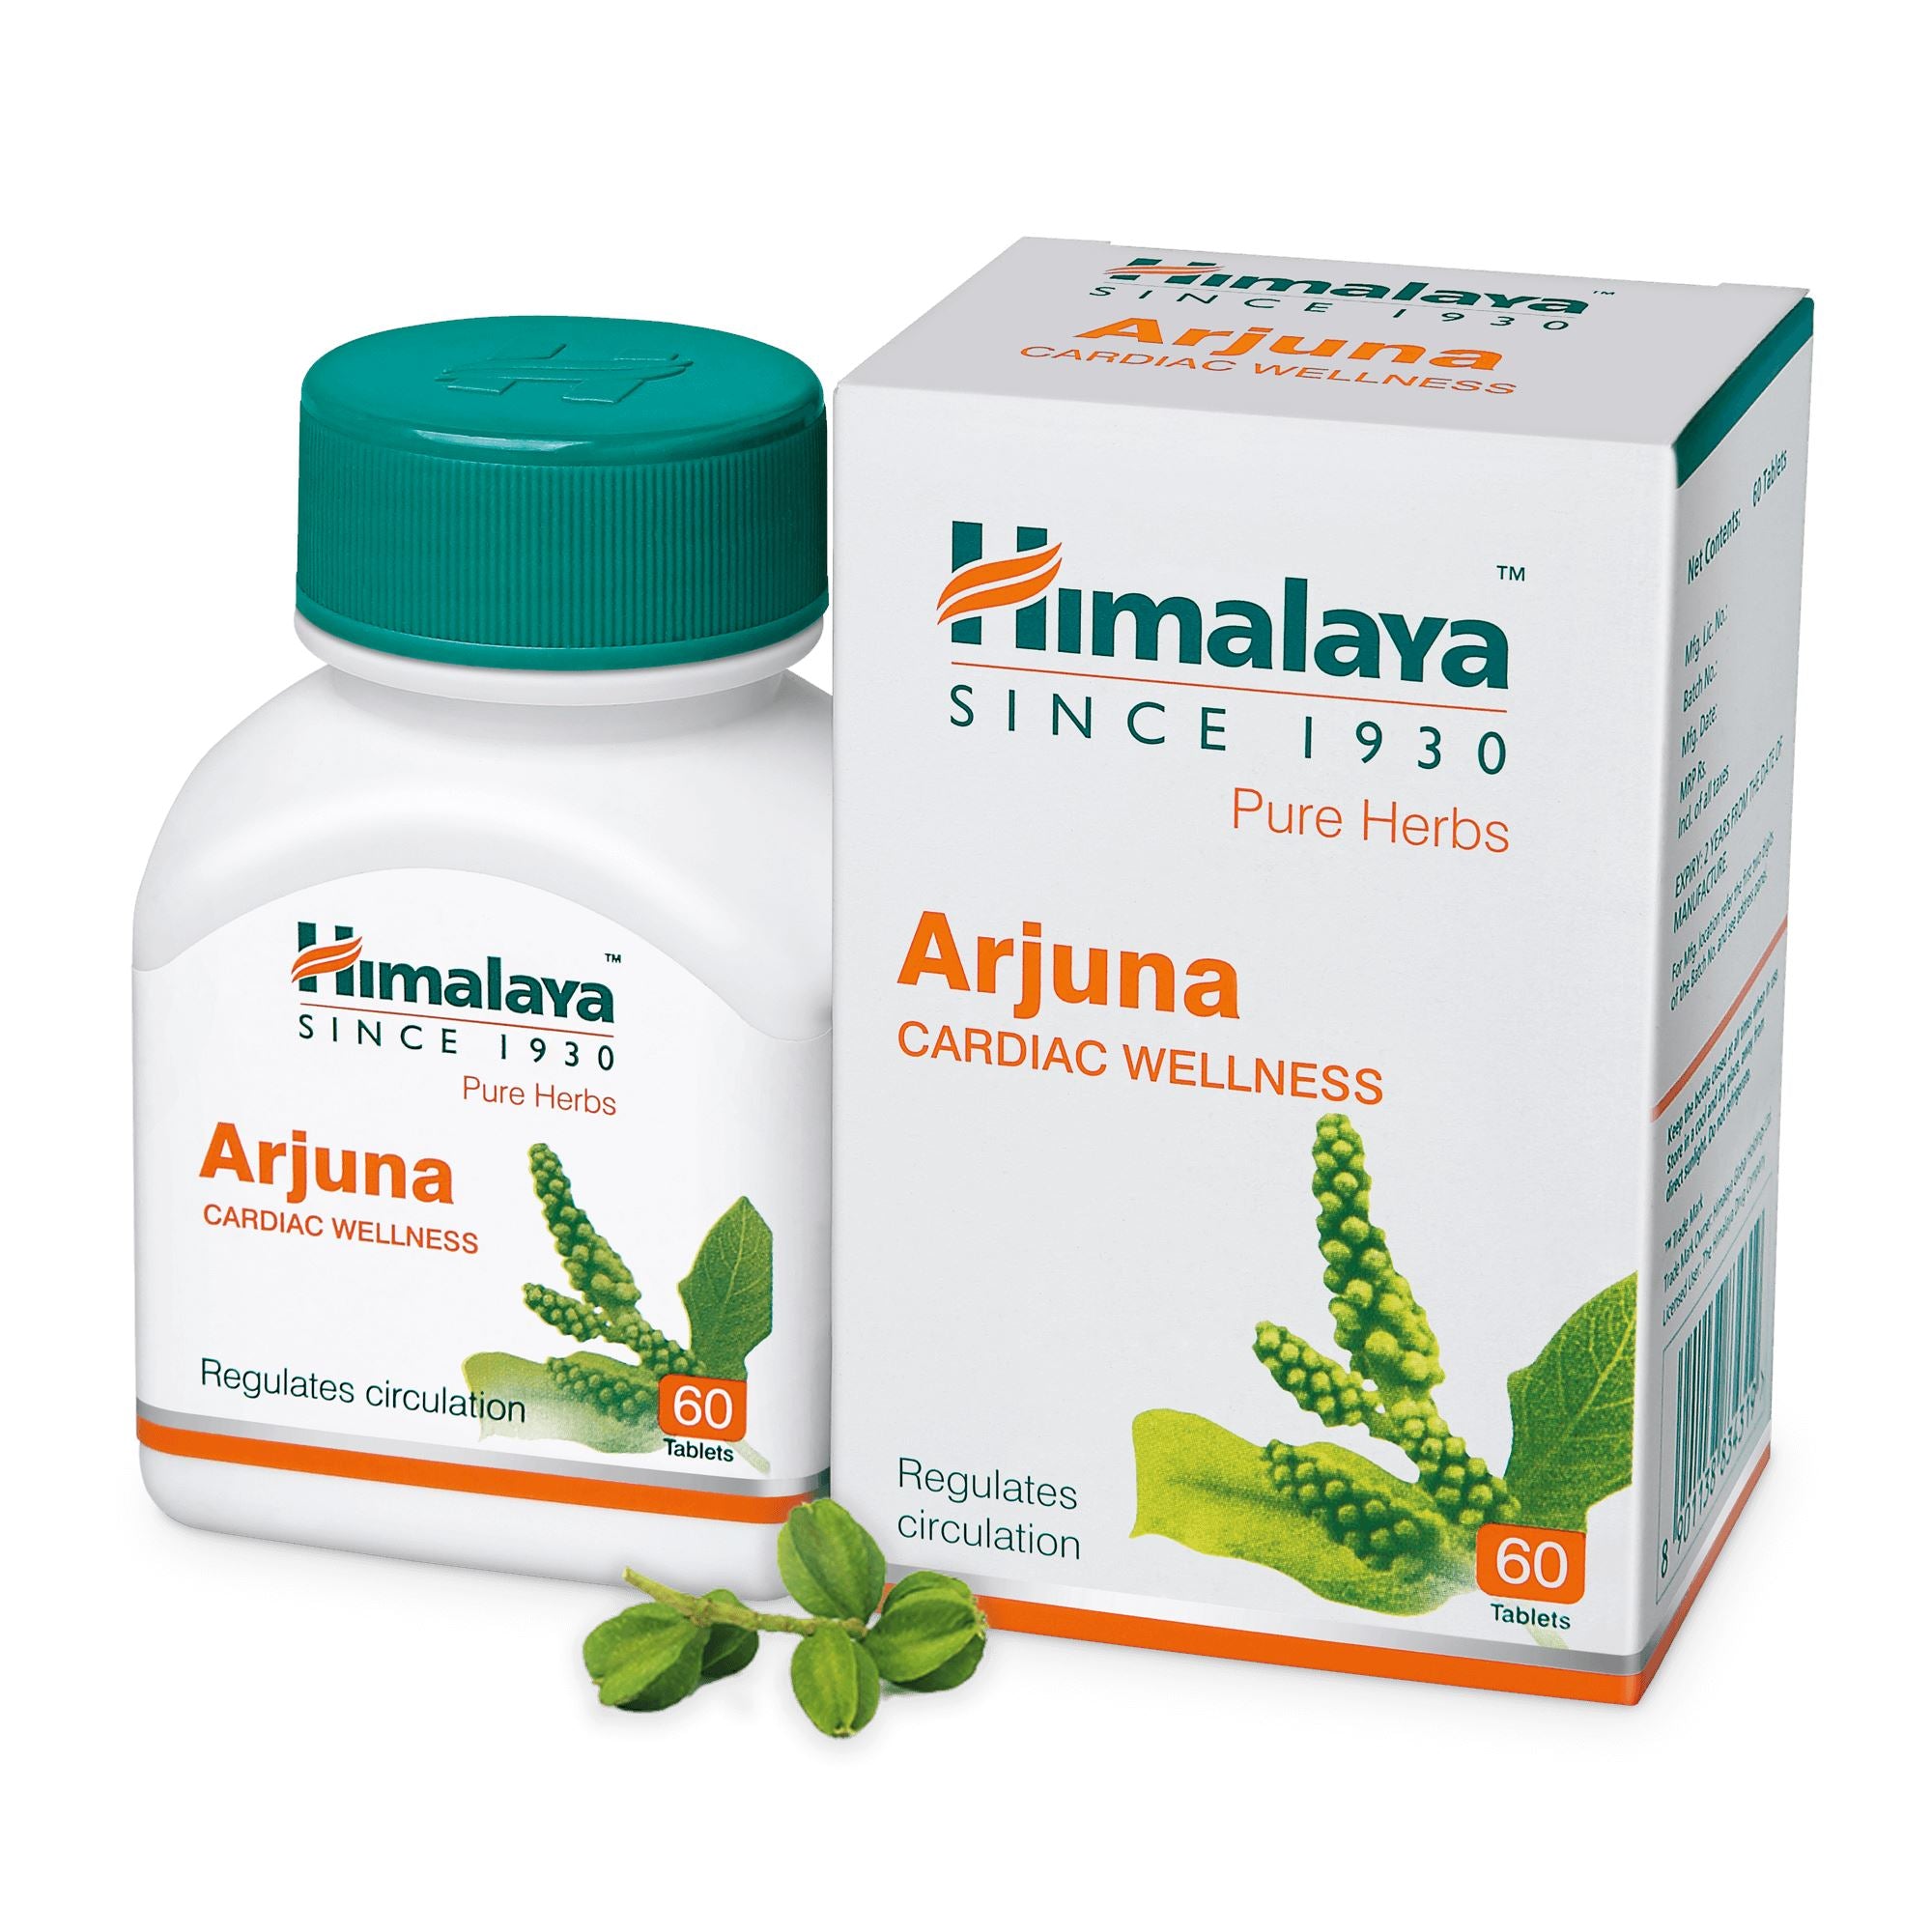 Himalaya Arjuna 60 Tablets - For cardiac wellness